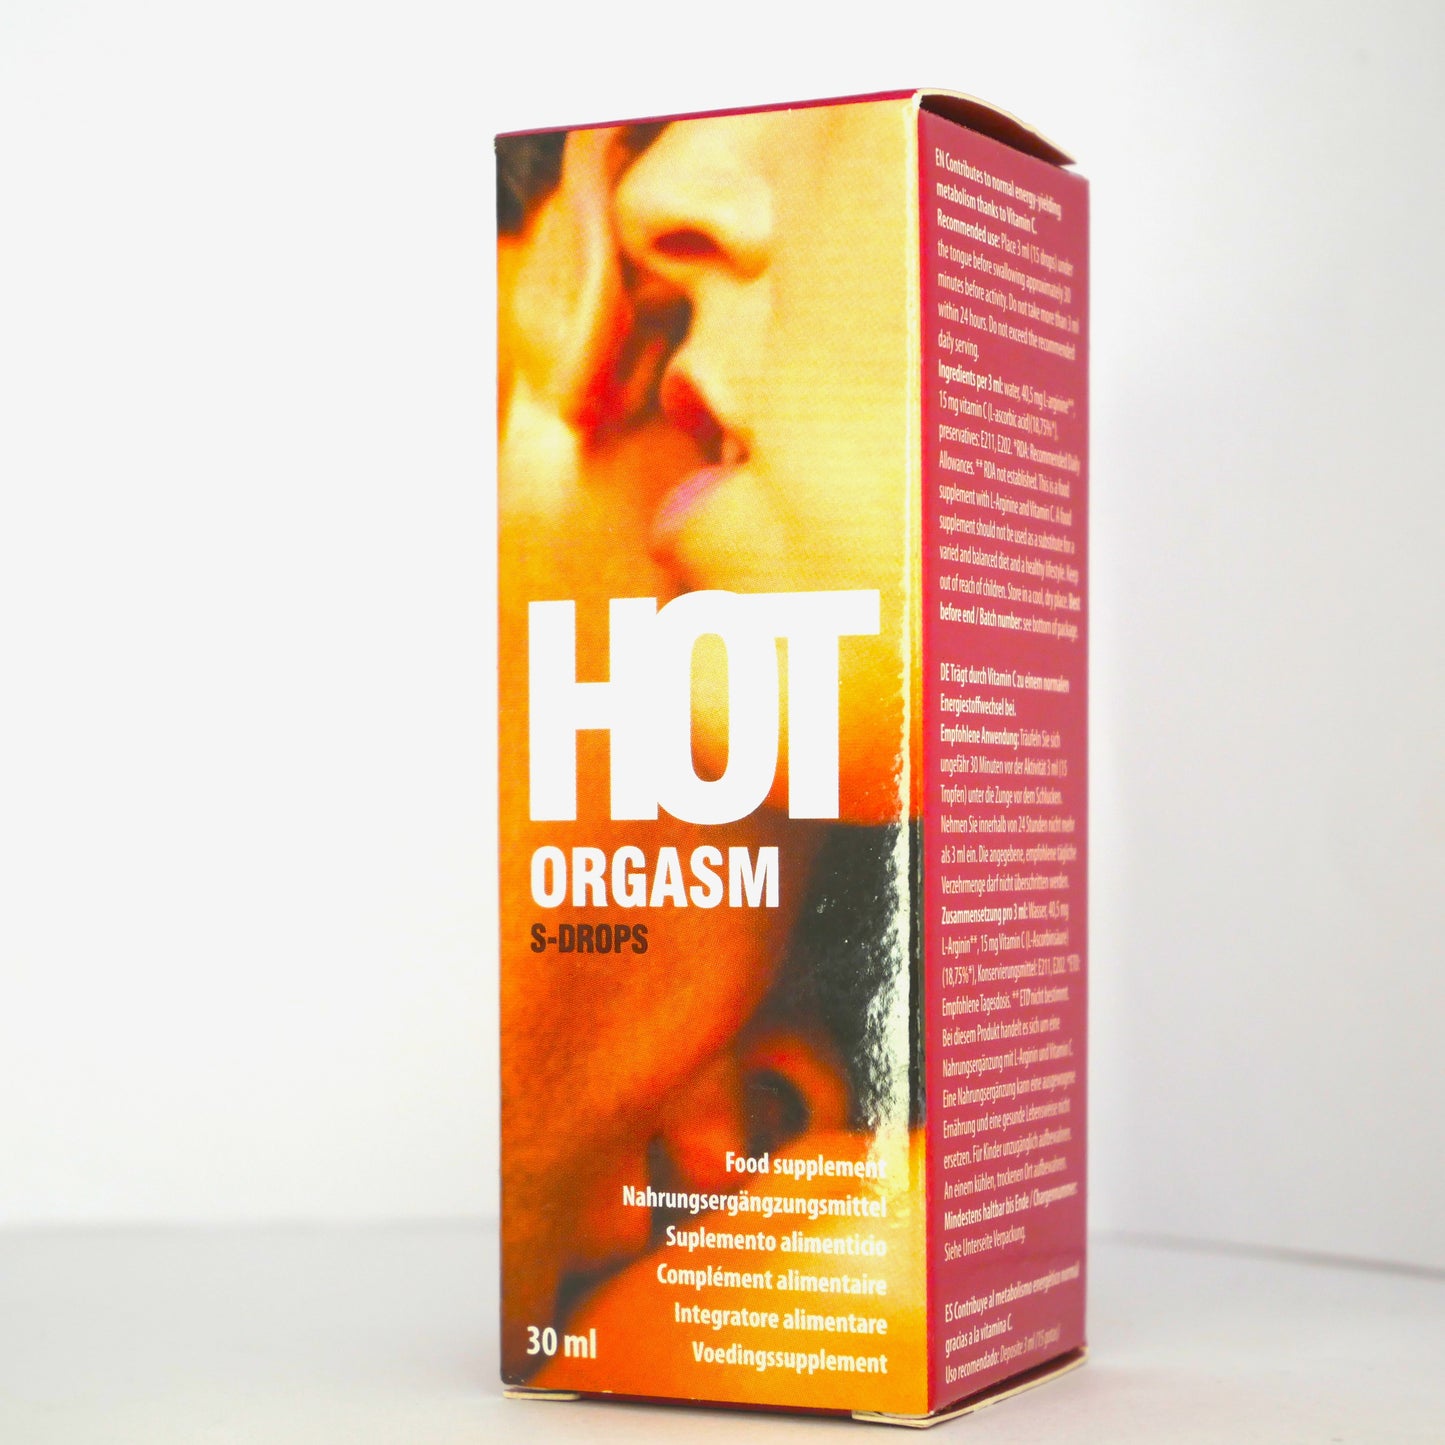 Hot Orgasm Love Drops 30ml